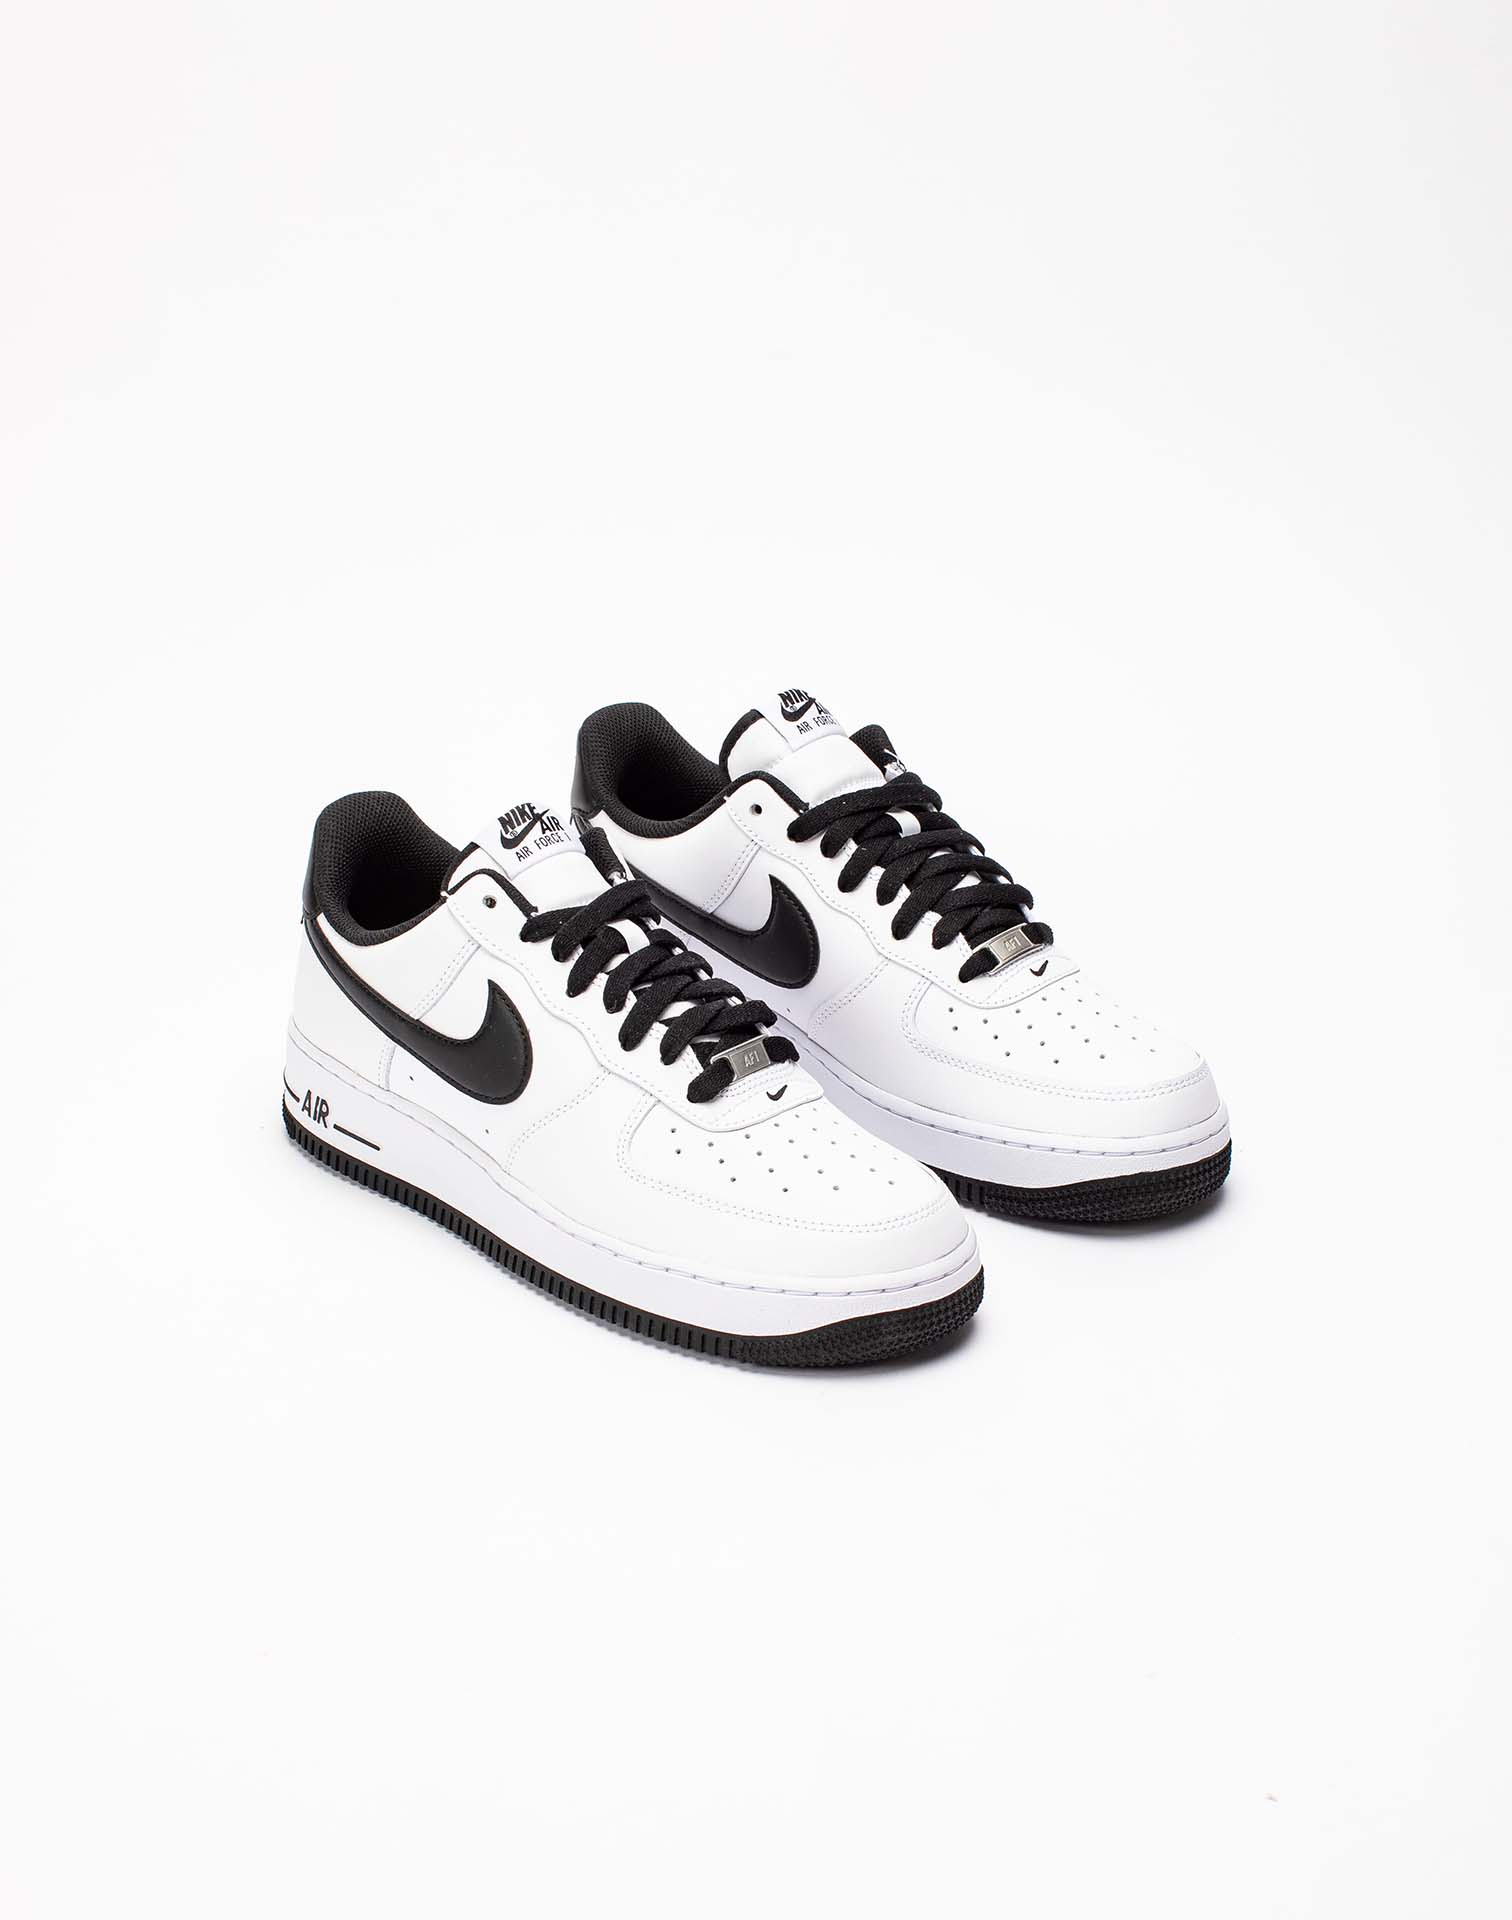 Nike Air Force 1 Low '07 "Hangul Day/Black/White" DZ5070-010 Shoes  Mens ※US6-12